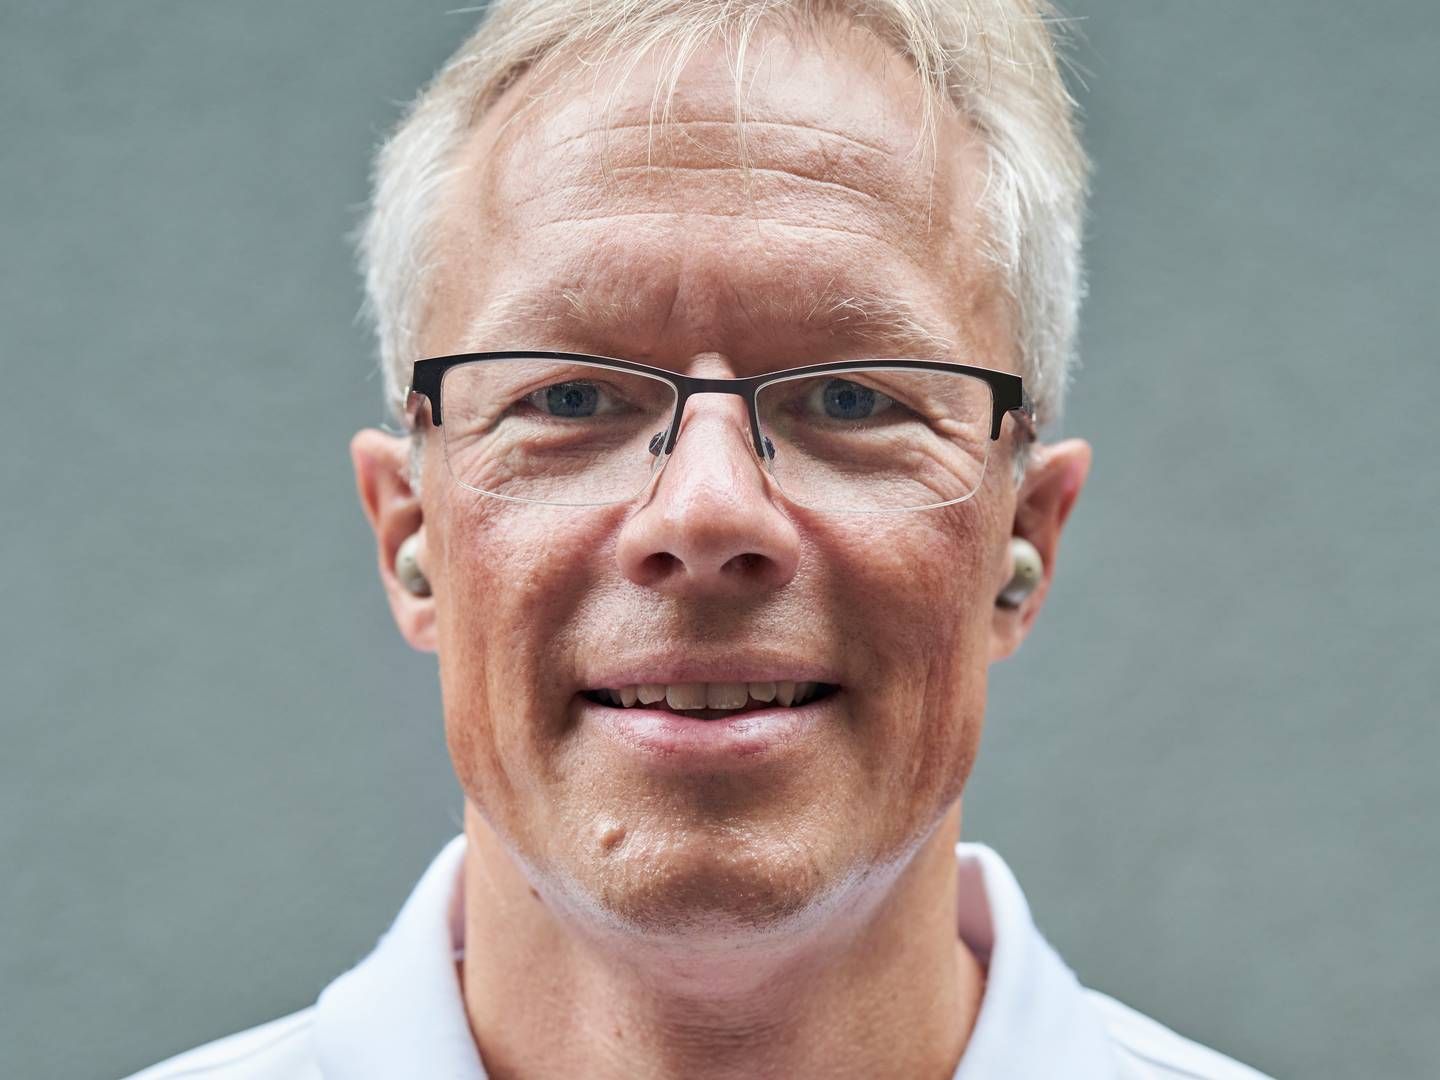 Michael Løvbjerg, CEO and co-founder of Lizn | Photo: Lizn / Pr